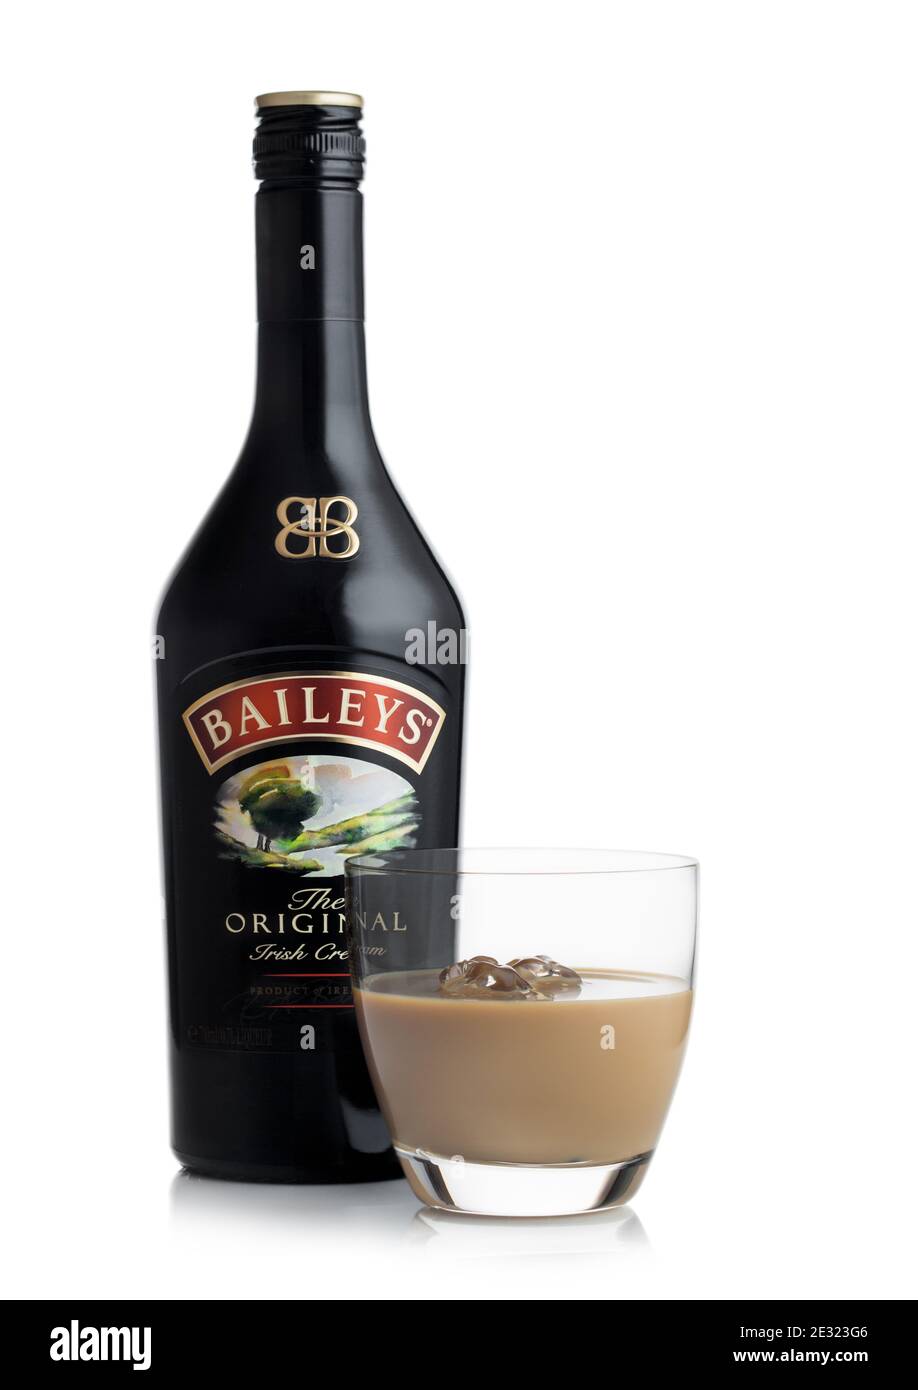 LONDON, UK - JUNE 02, 2020: Bottle and glass of Baileys Original Irish Cream on white background. Irish whiskey and cream based liqueur. Stock Photo